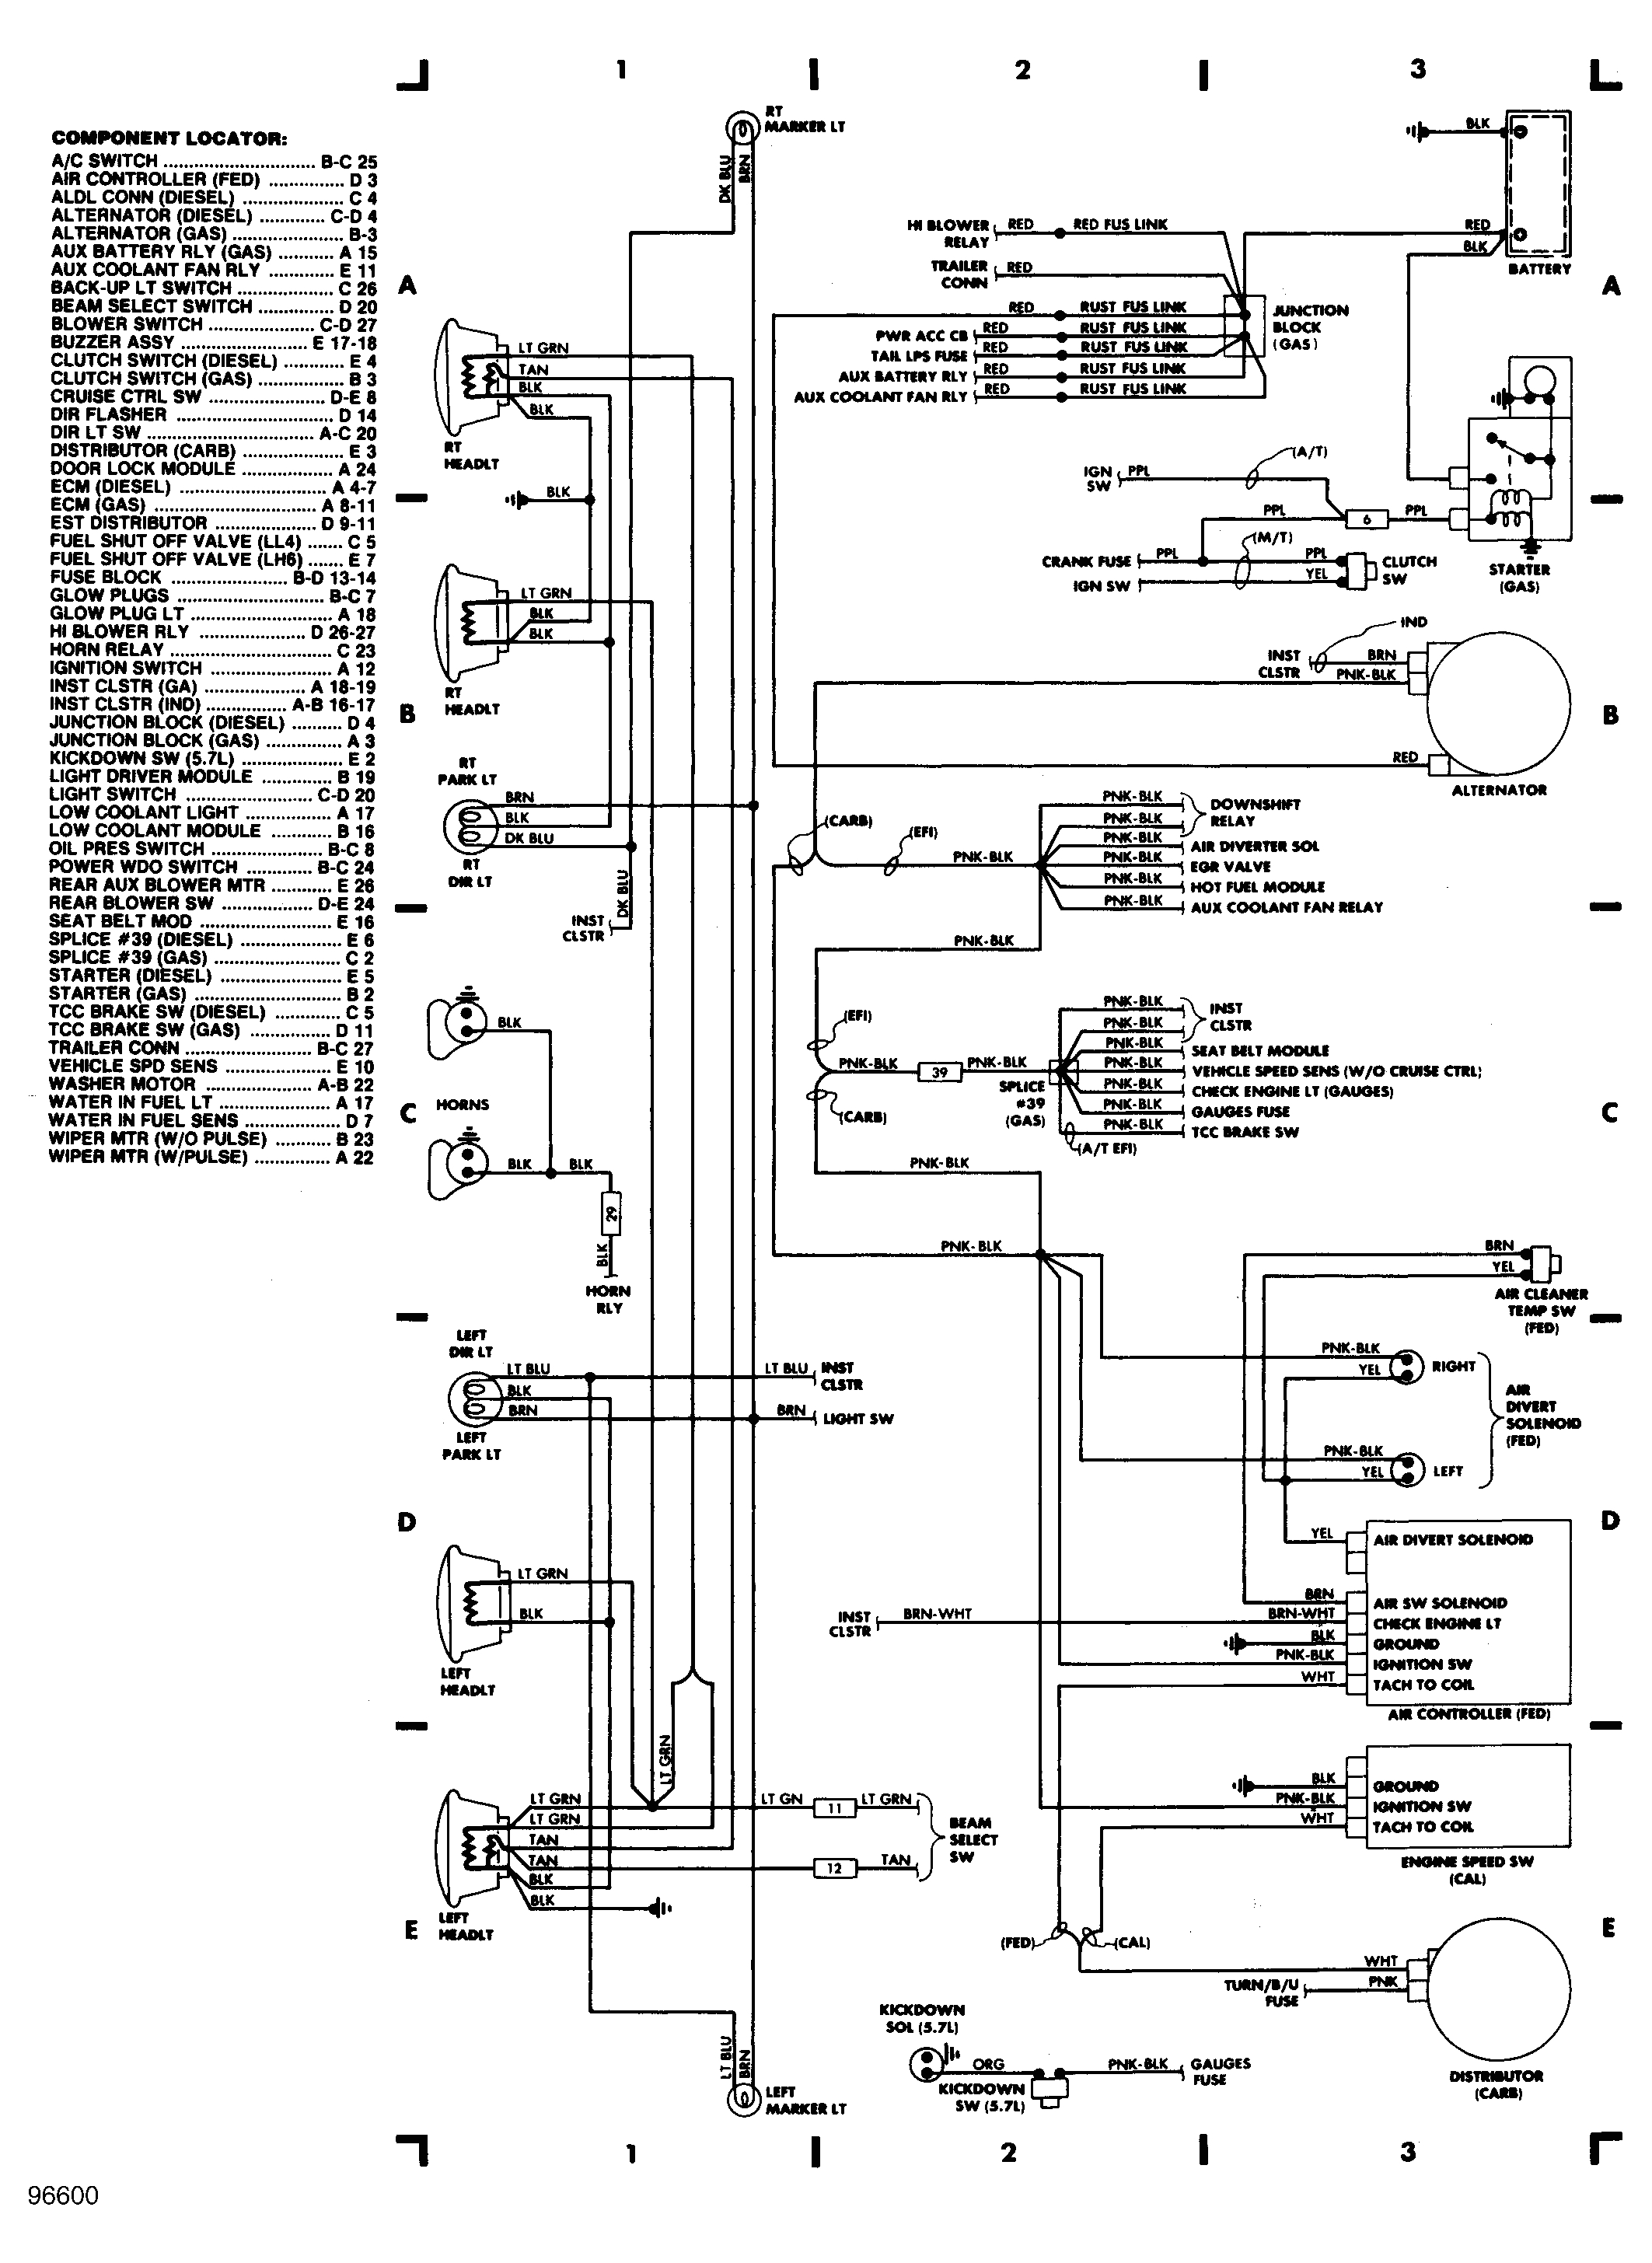 1988 chevy van fuse box wiring diagram page 1989 chevy van fuse panel diagram 1988 chevy